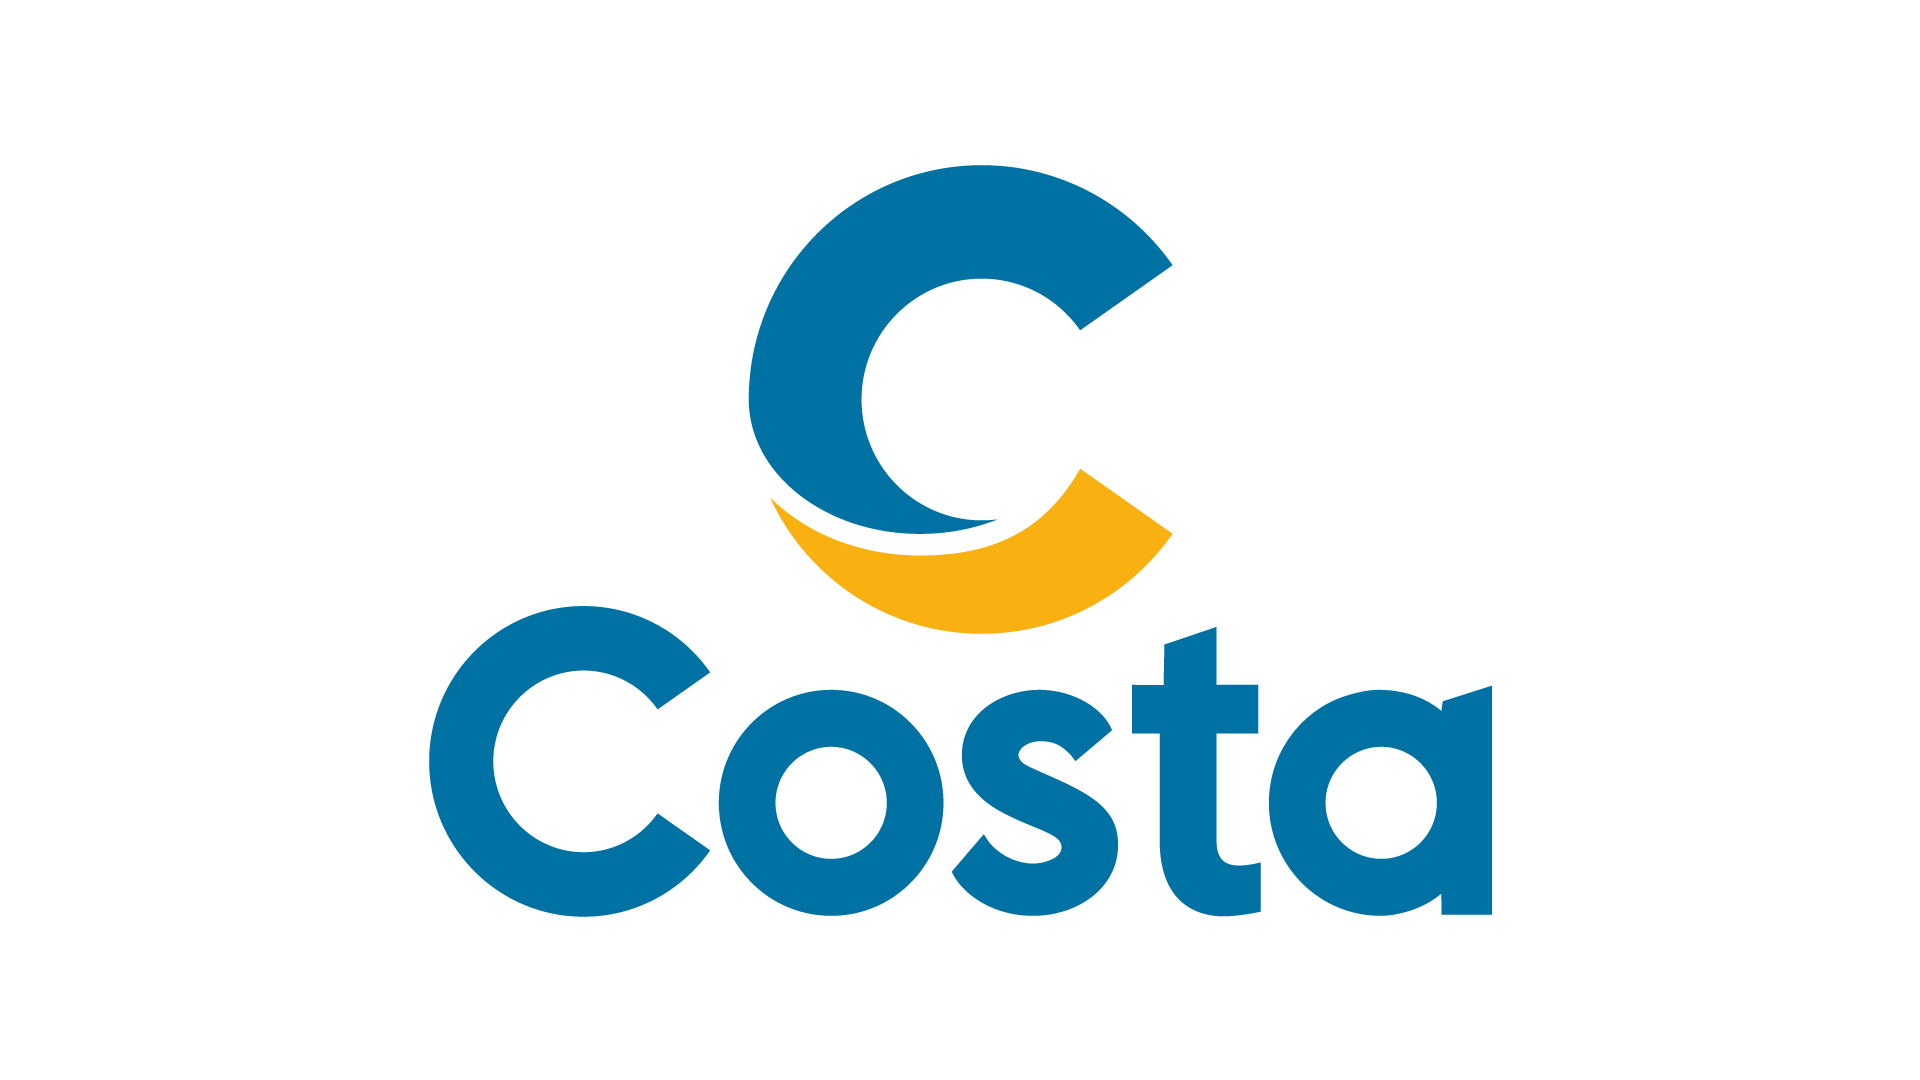 logo_costa_blu_yellow